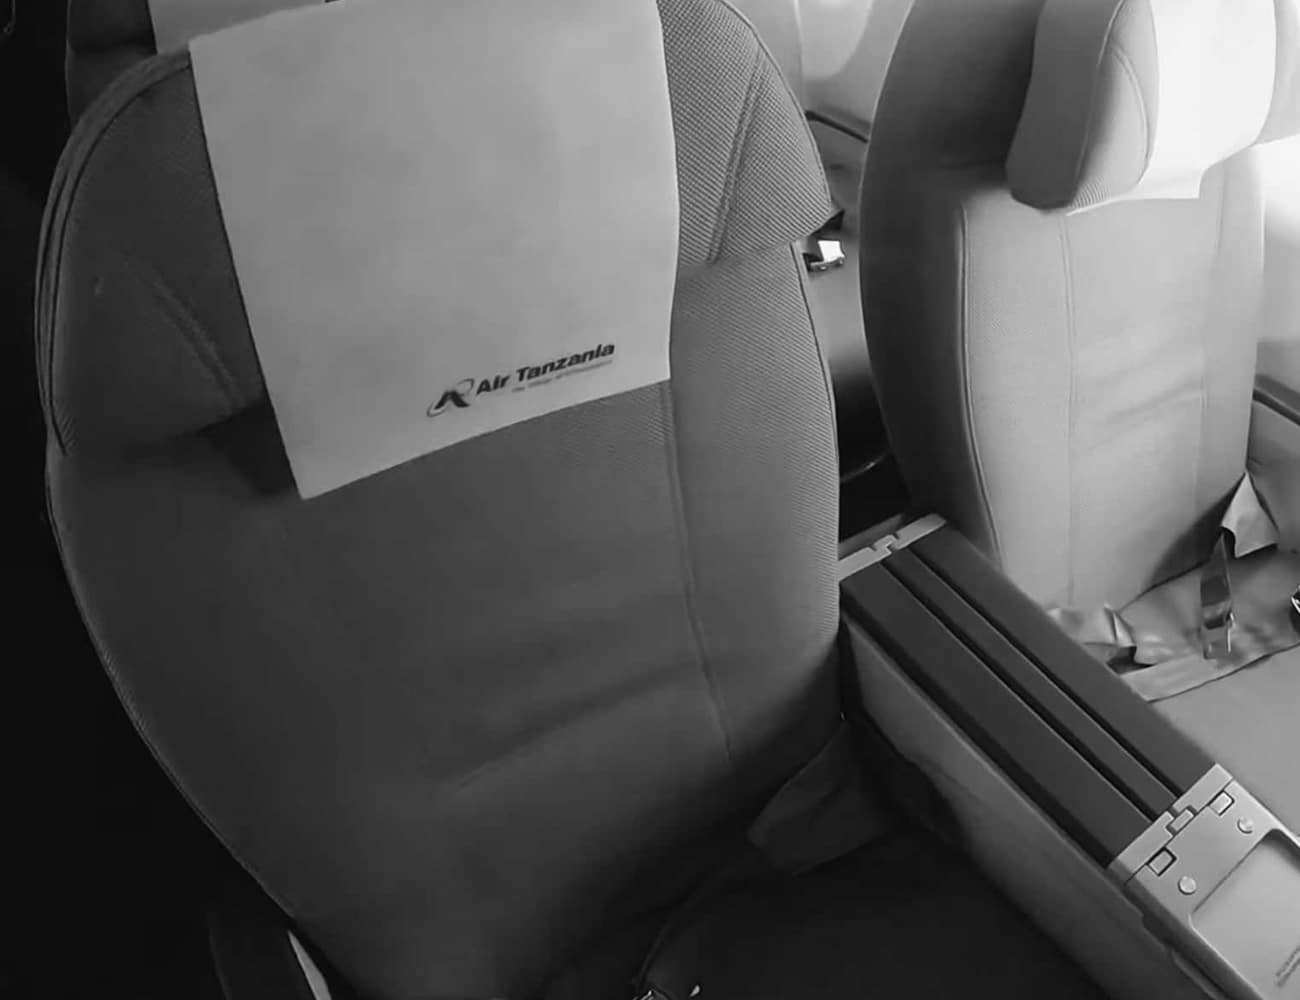 Comfortable Seats on Air Tanzanian Flight